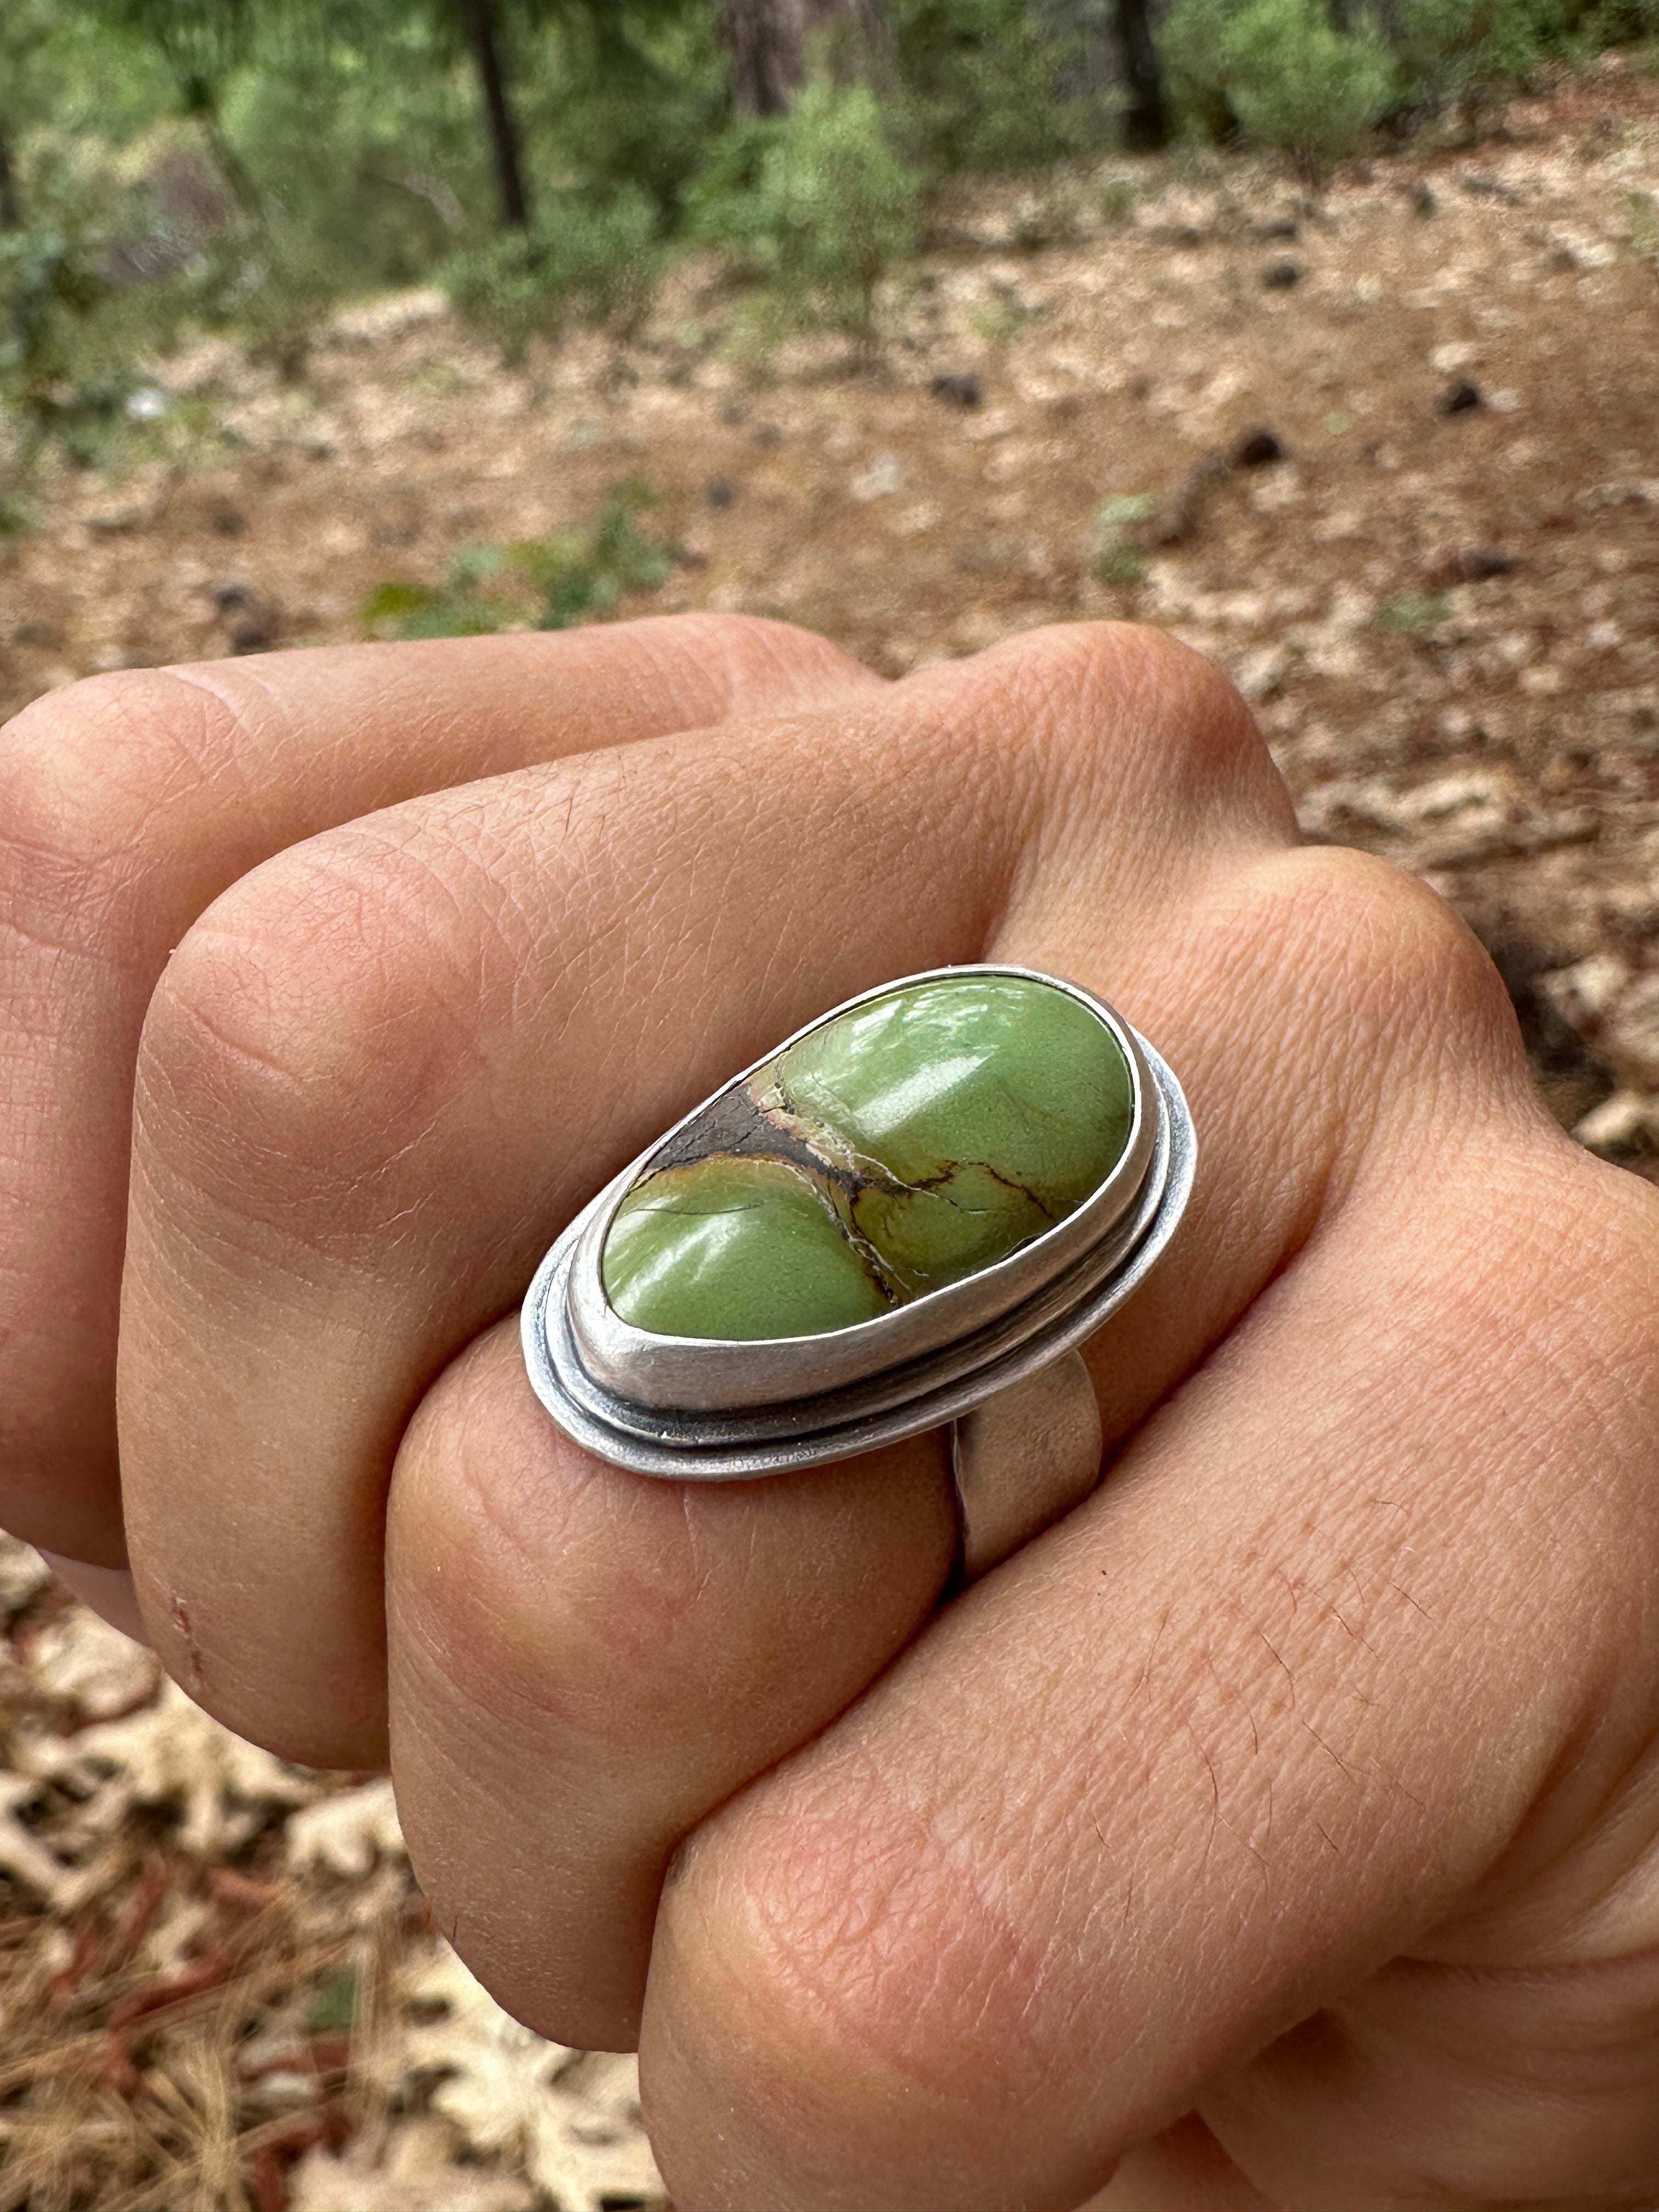 Green Hubei Adjustable Ring